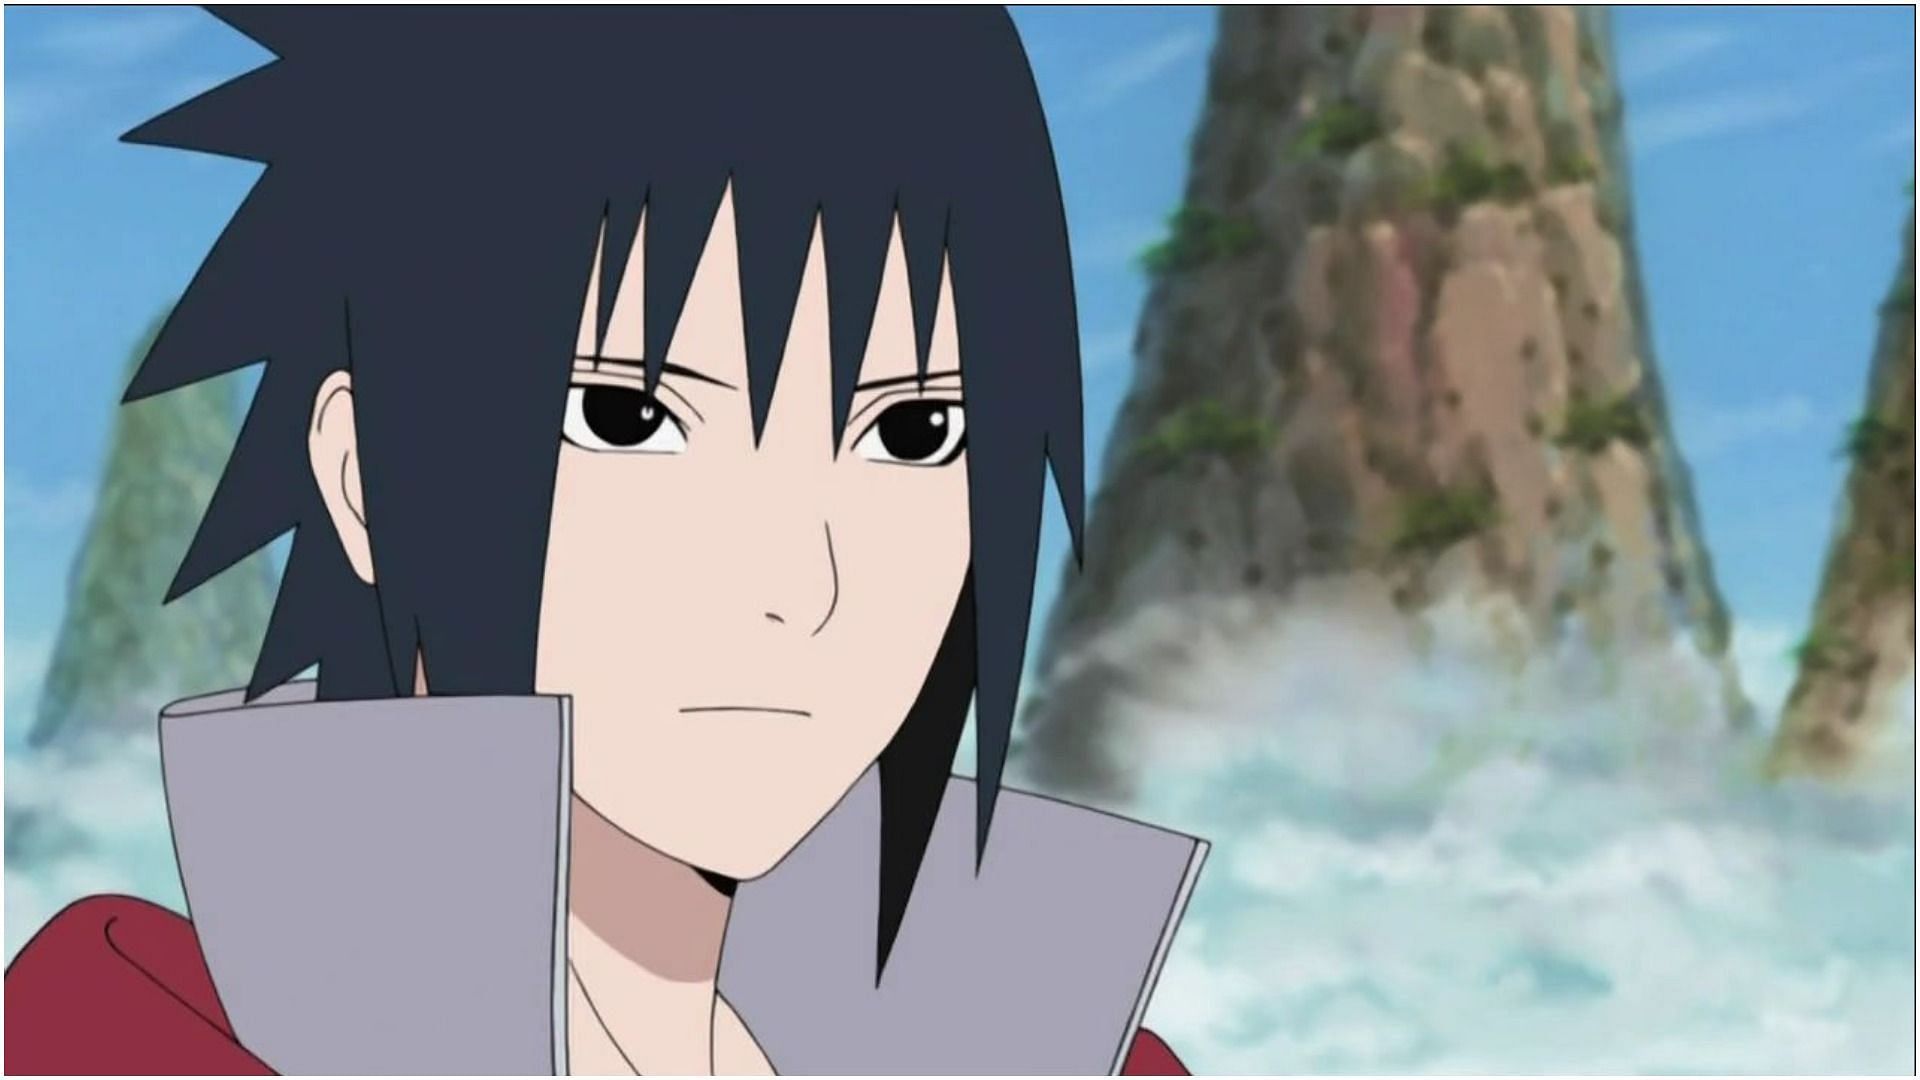 Sasuke Uchiha as shown in the anime (Image via Pierrot)